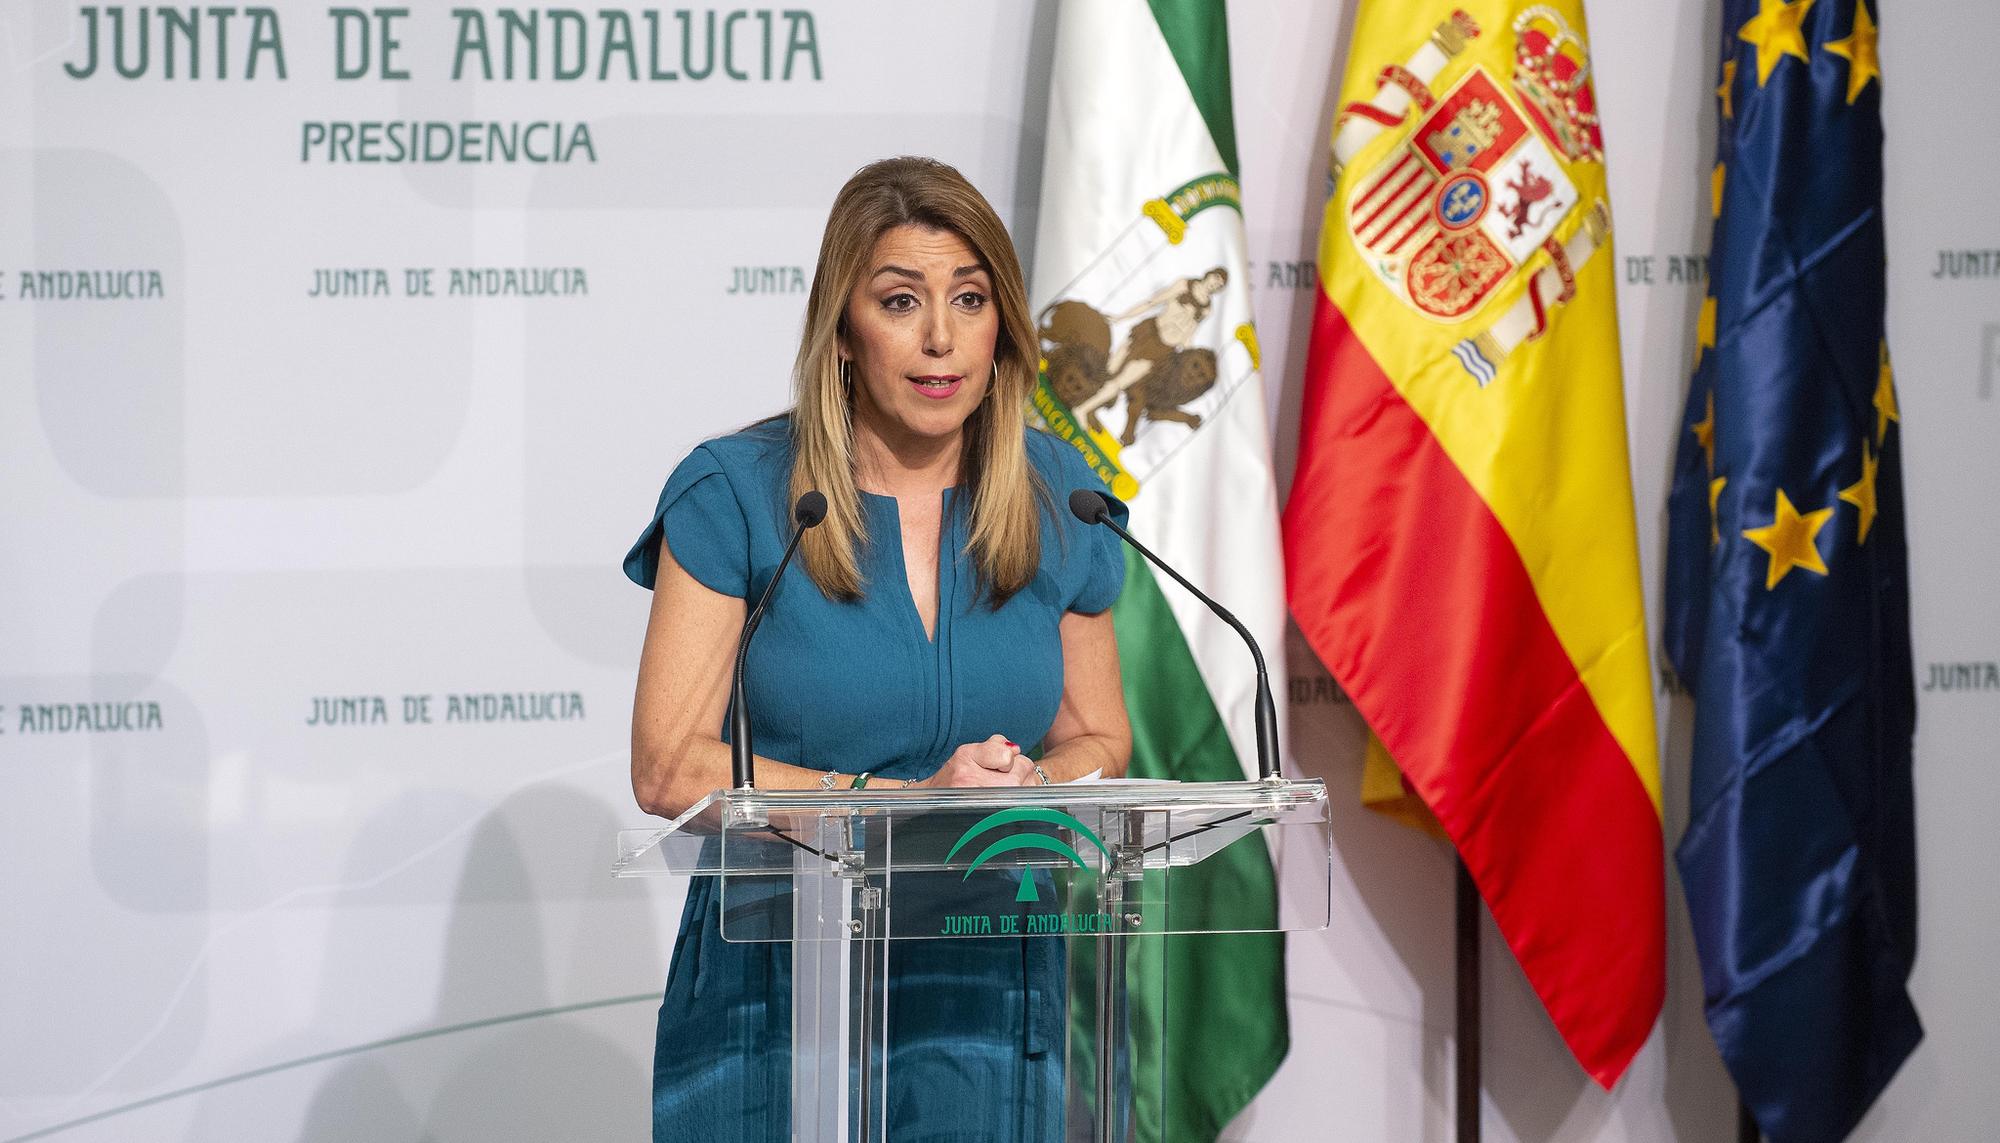 Susana Díaz Junta de Andalucia